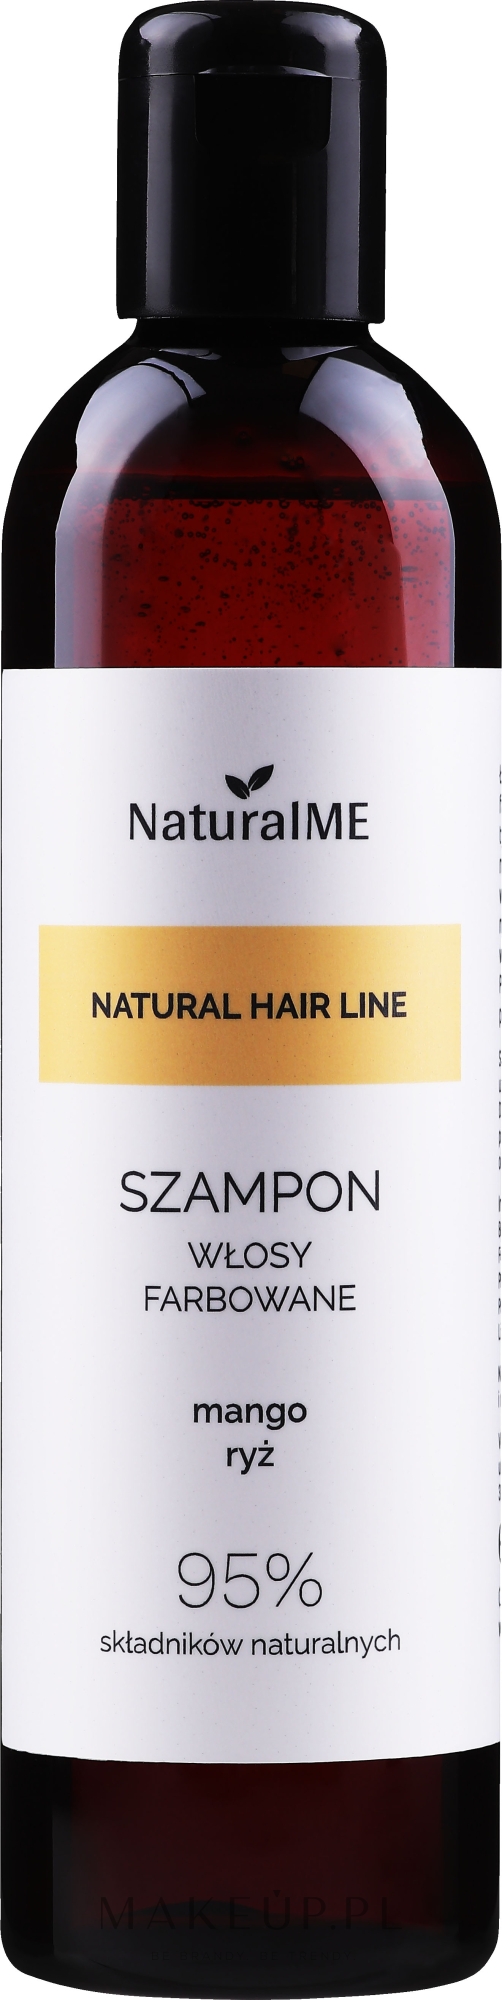 szampon naturalny wizaz